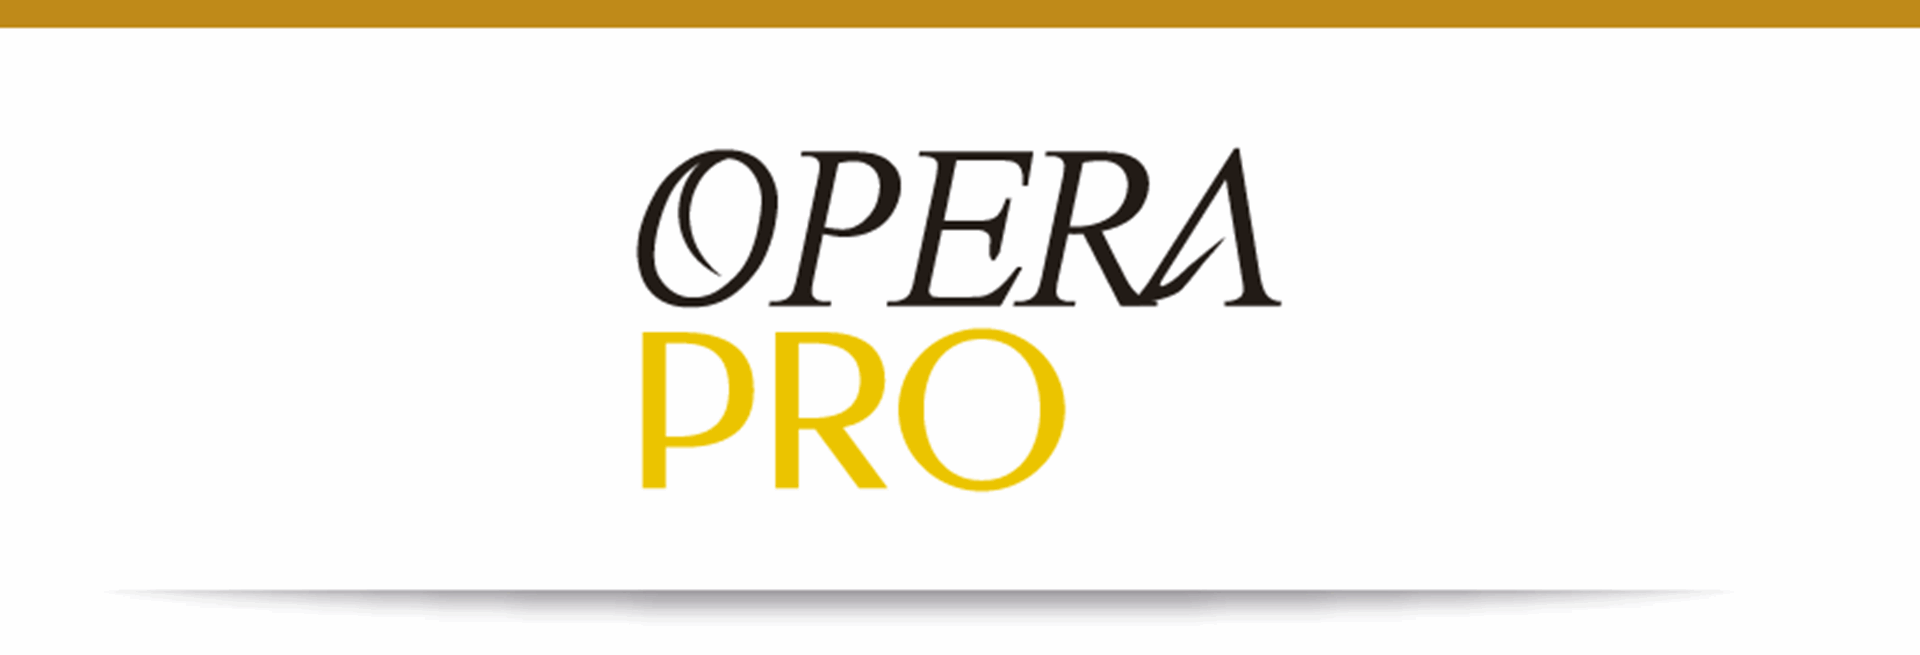 Operapro